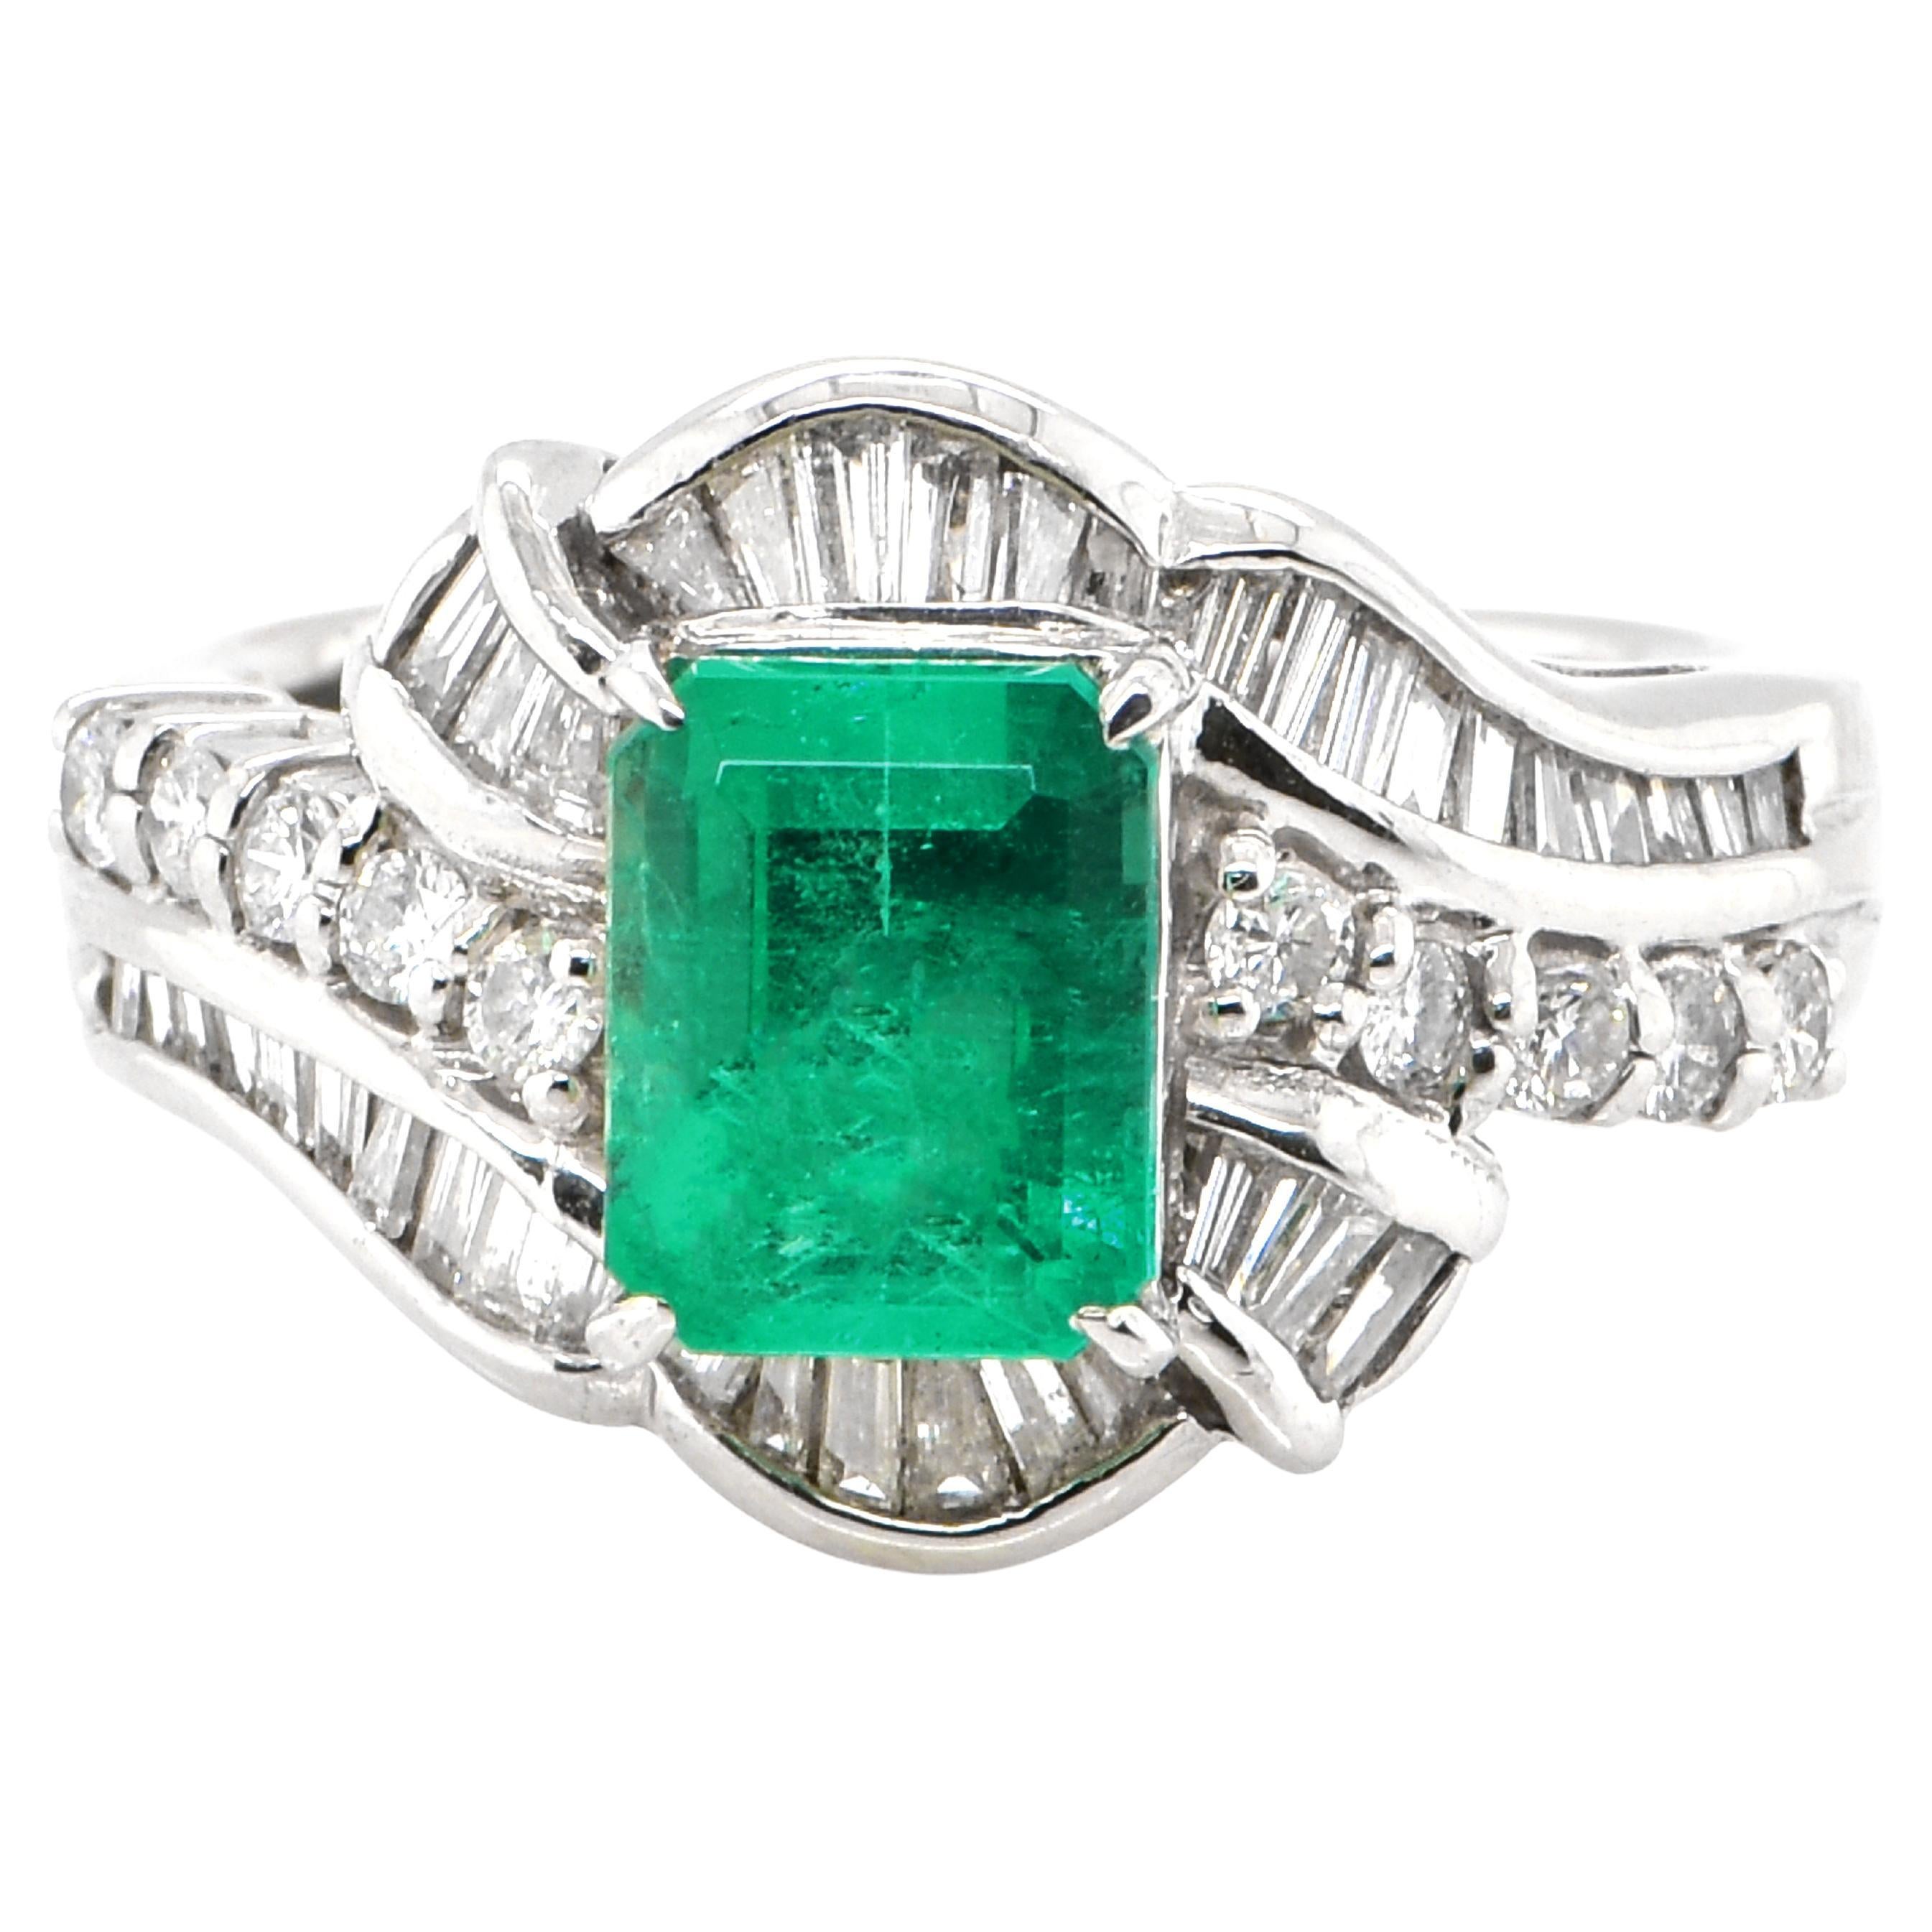 1.83 Carat Natural Emerald & Diamond Estate Cocktail Ring Made in Platinum For Sale